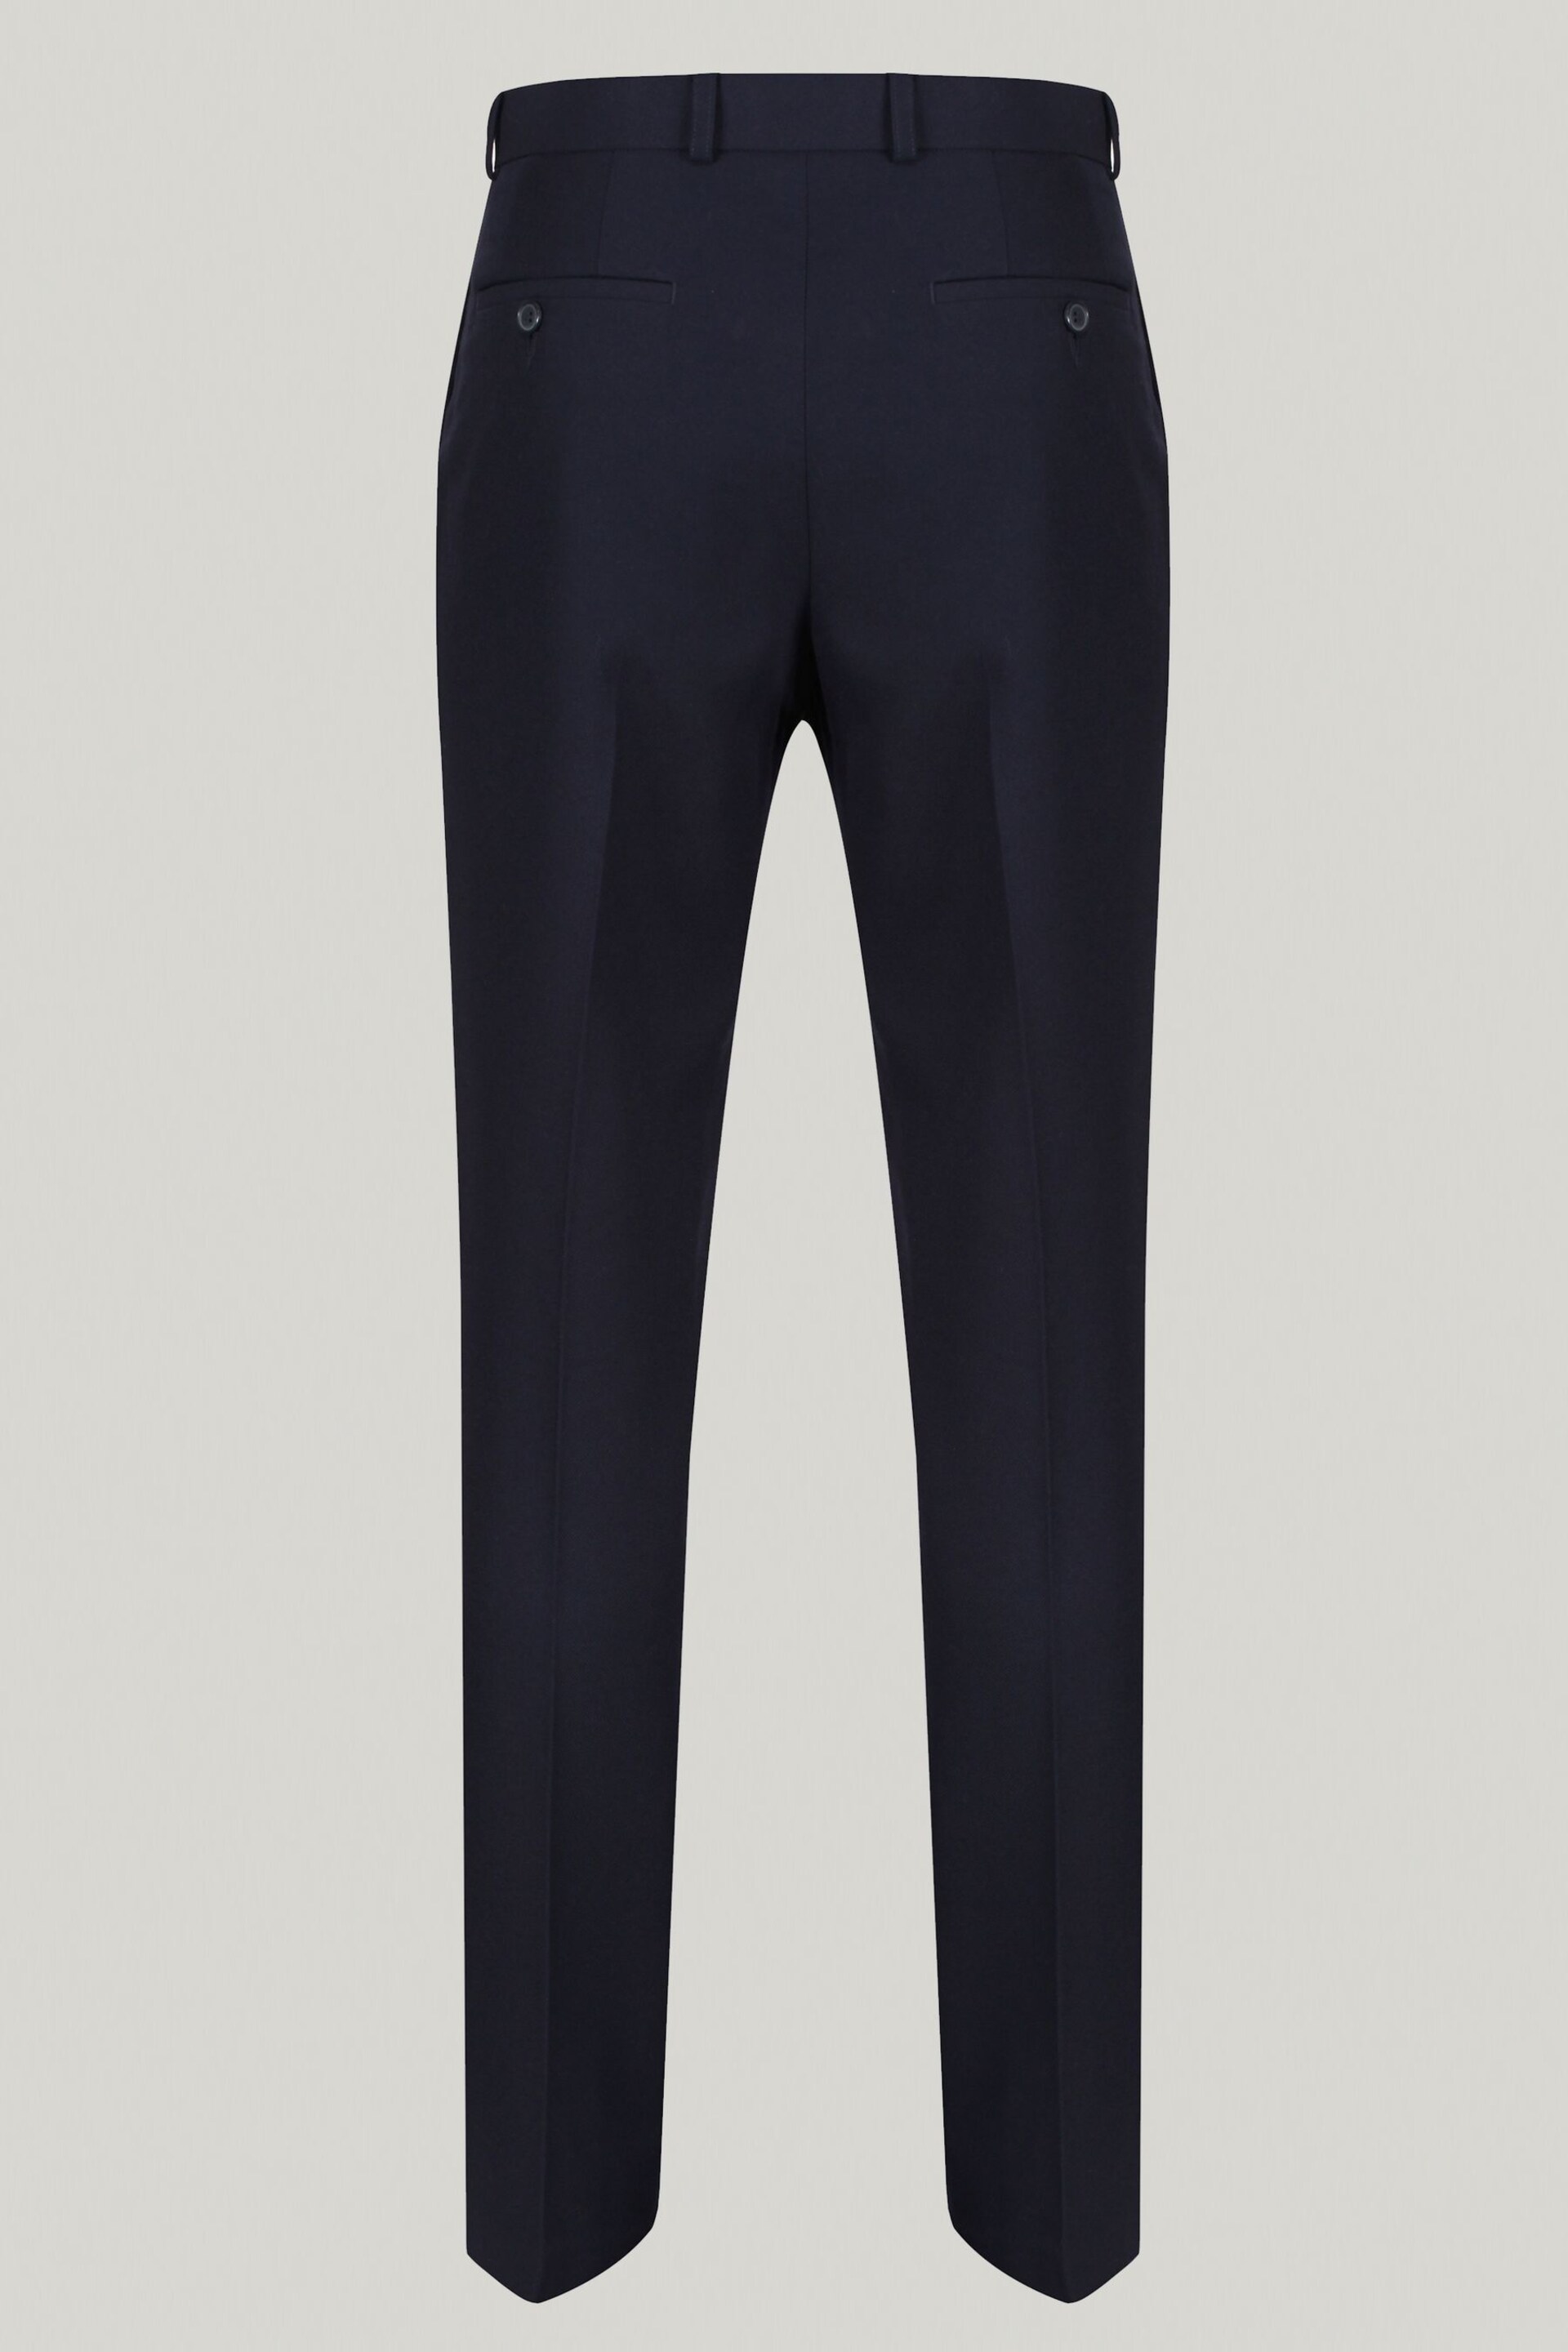 Trutex Senior Boys Slim Leg Navy School Trousers - Image 5 of 5